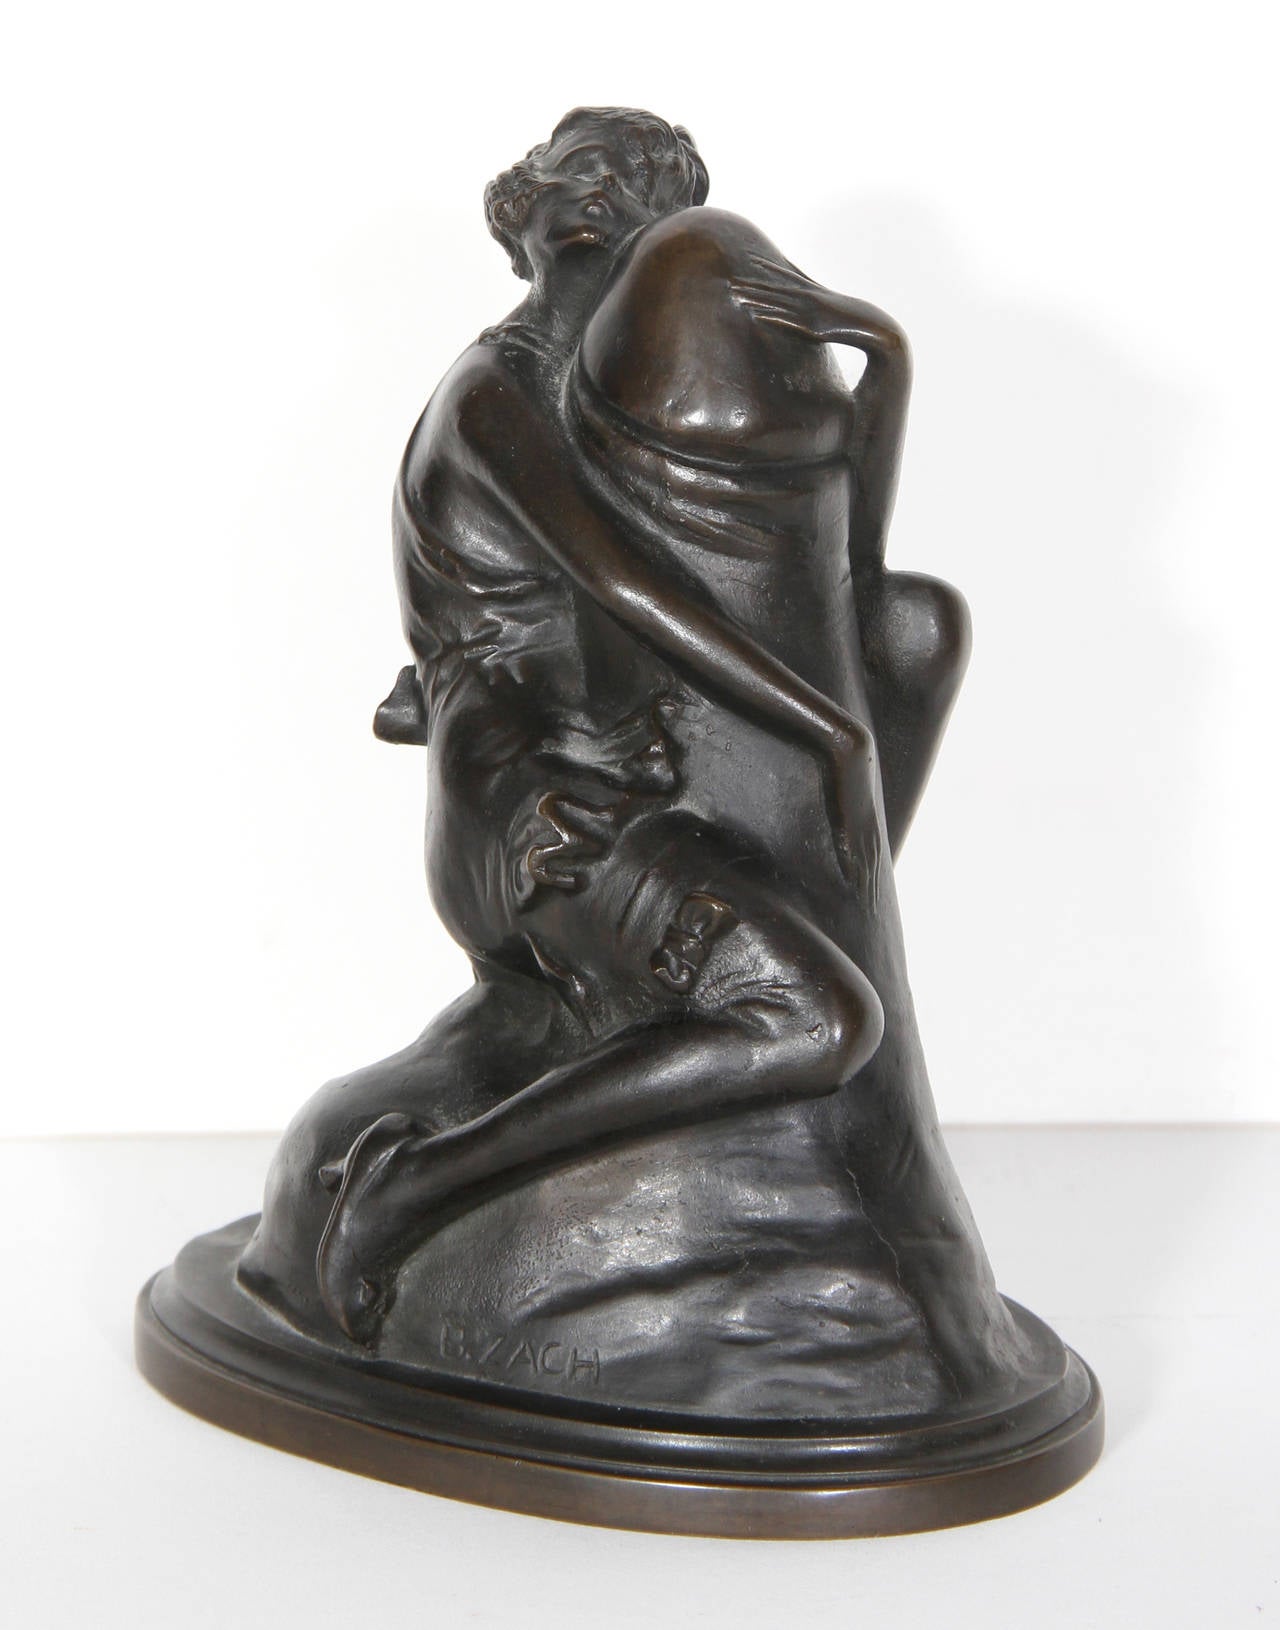 Bruno Zach Nude Sculpture - The Hugger